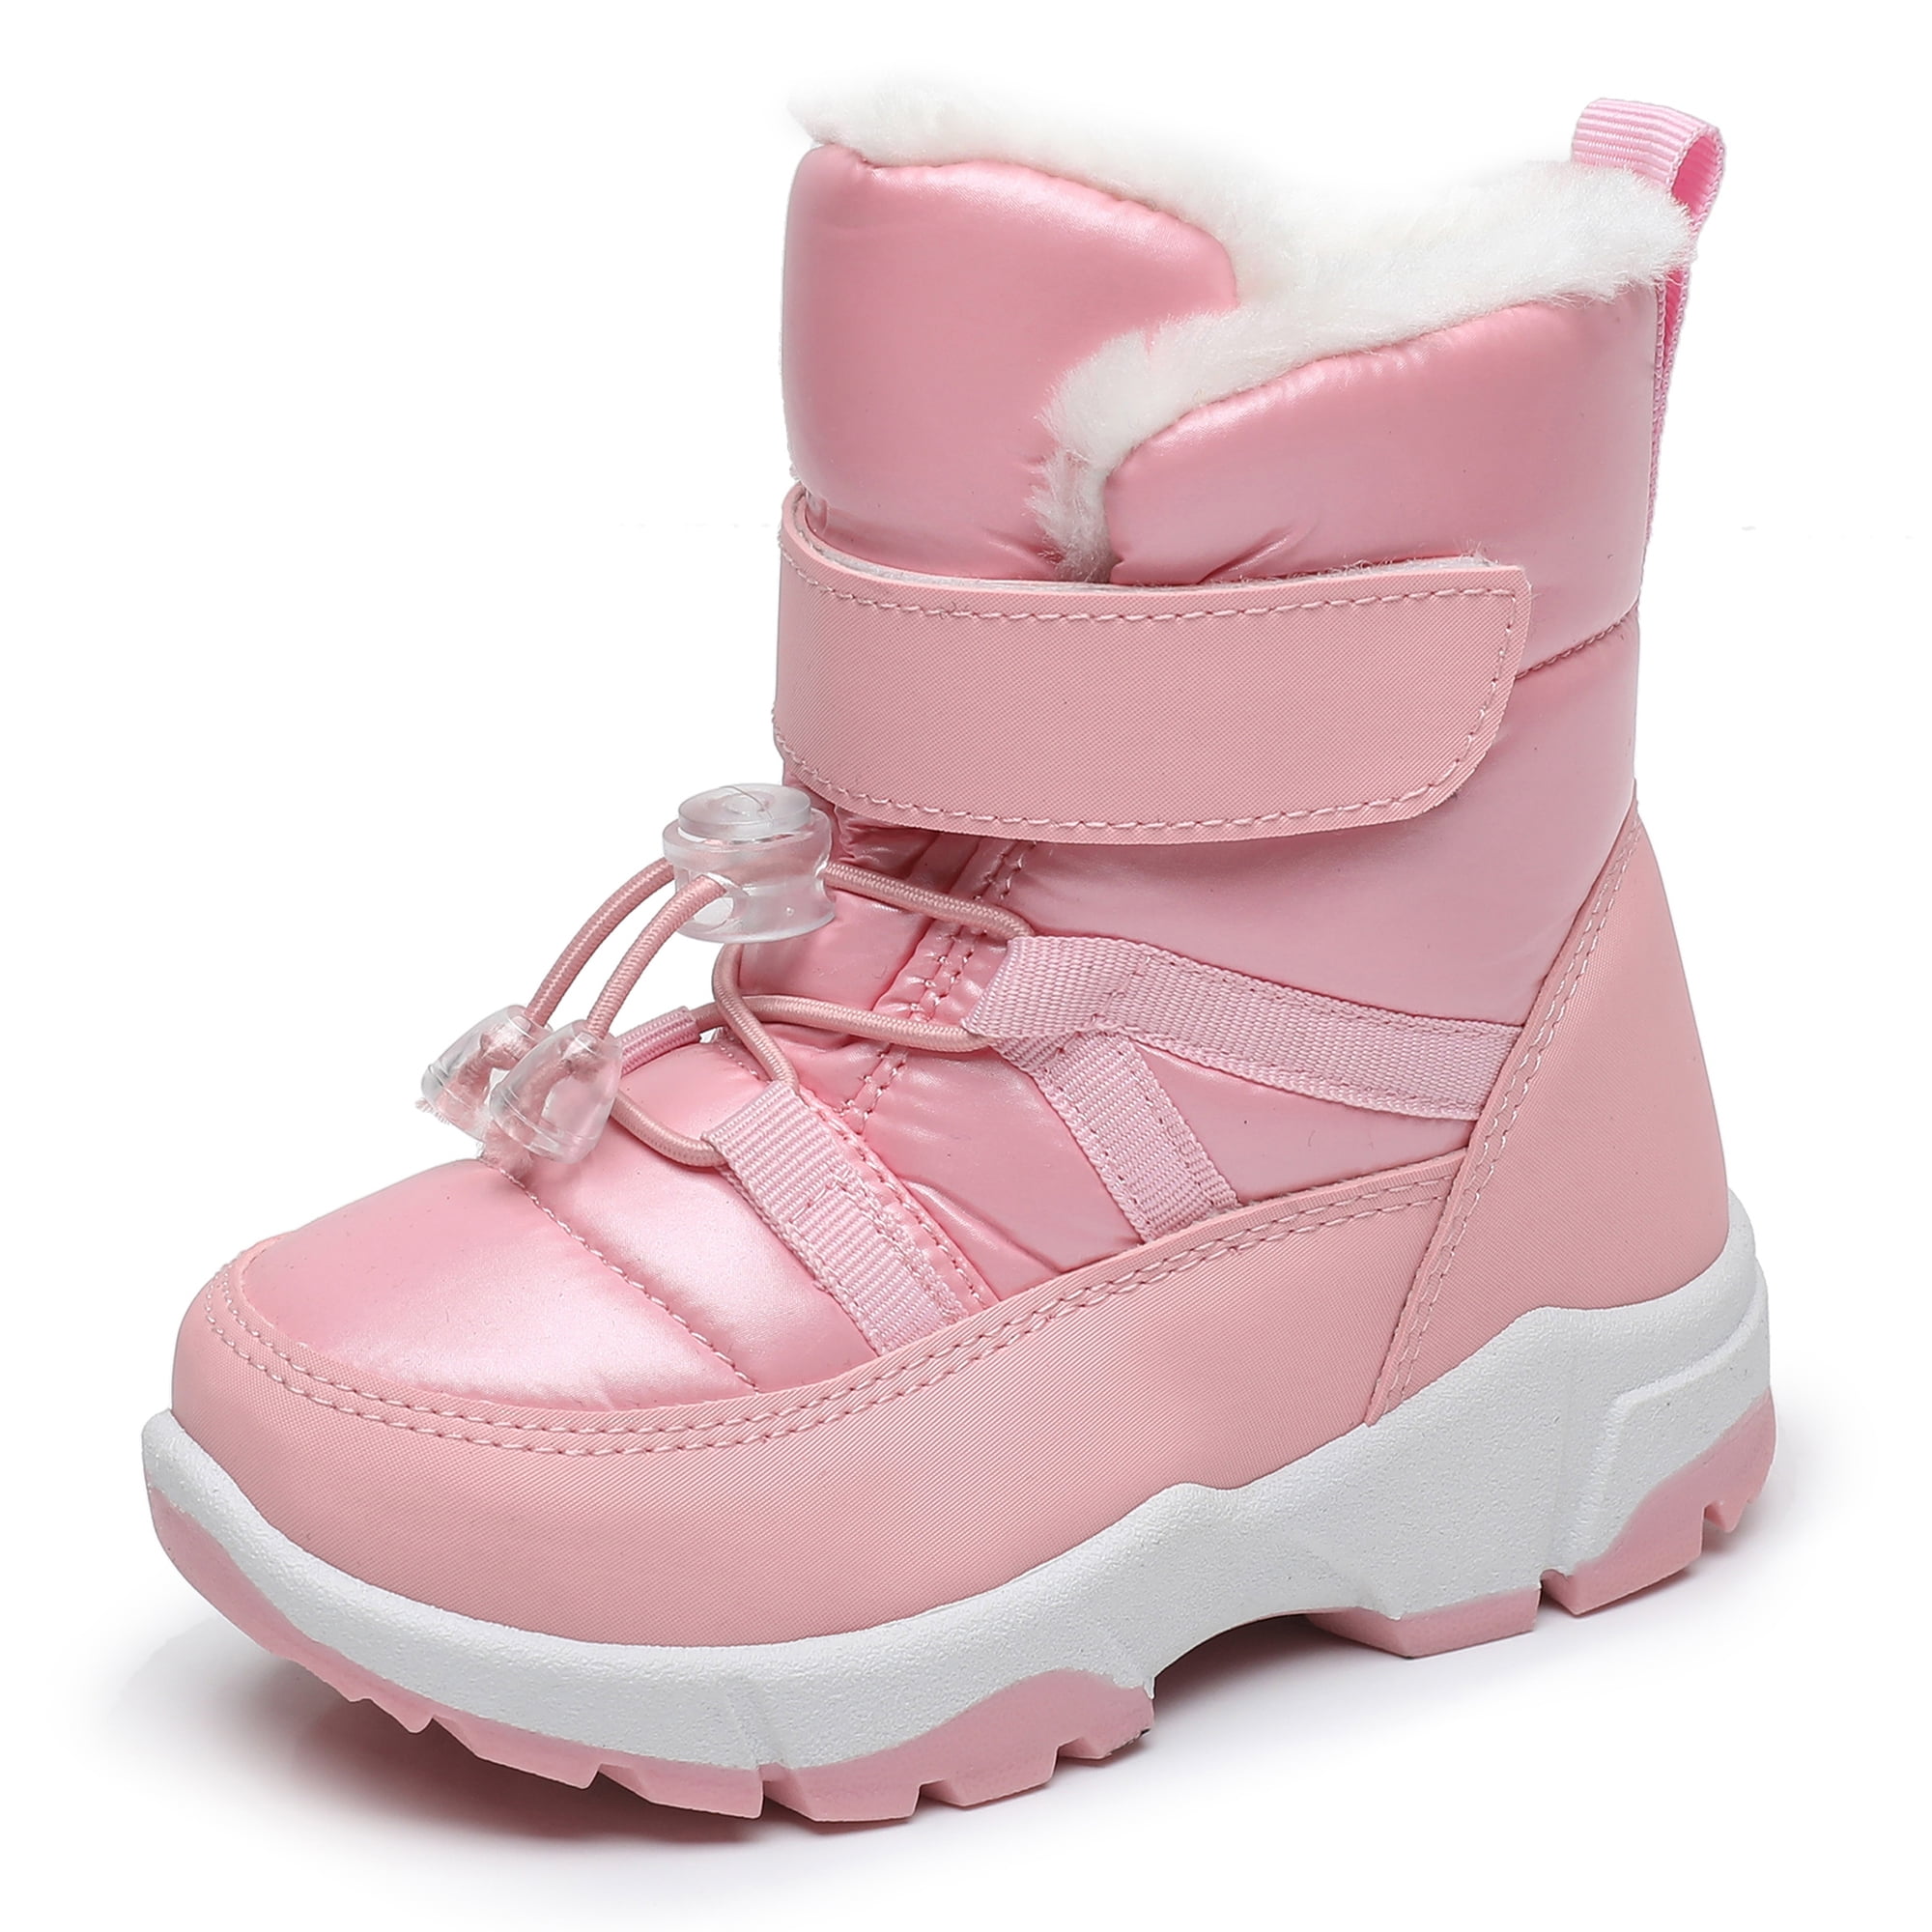 Blikcon Unisex Kids Boys Girls Outdoor Cold Weather Winter Snow Boots ...